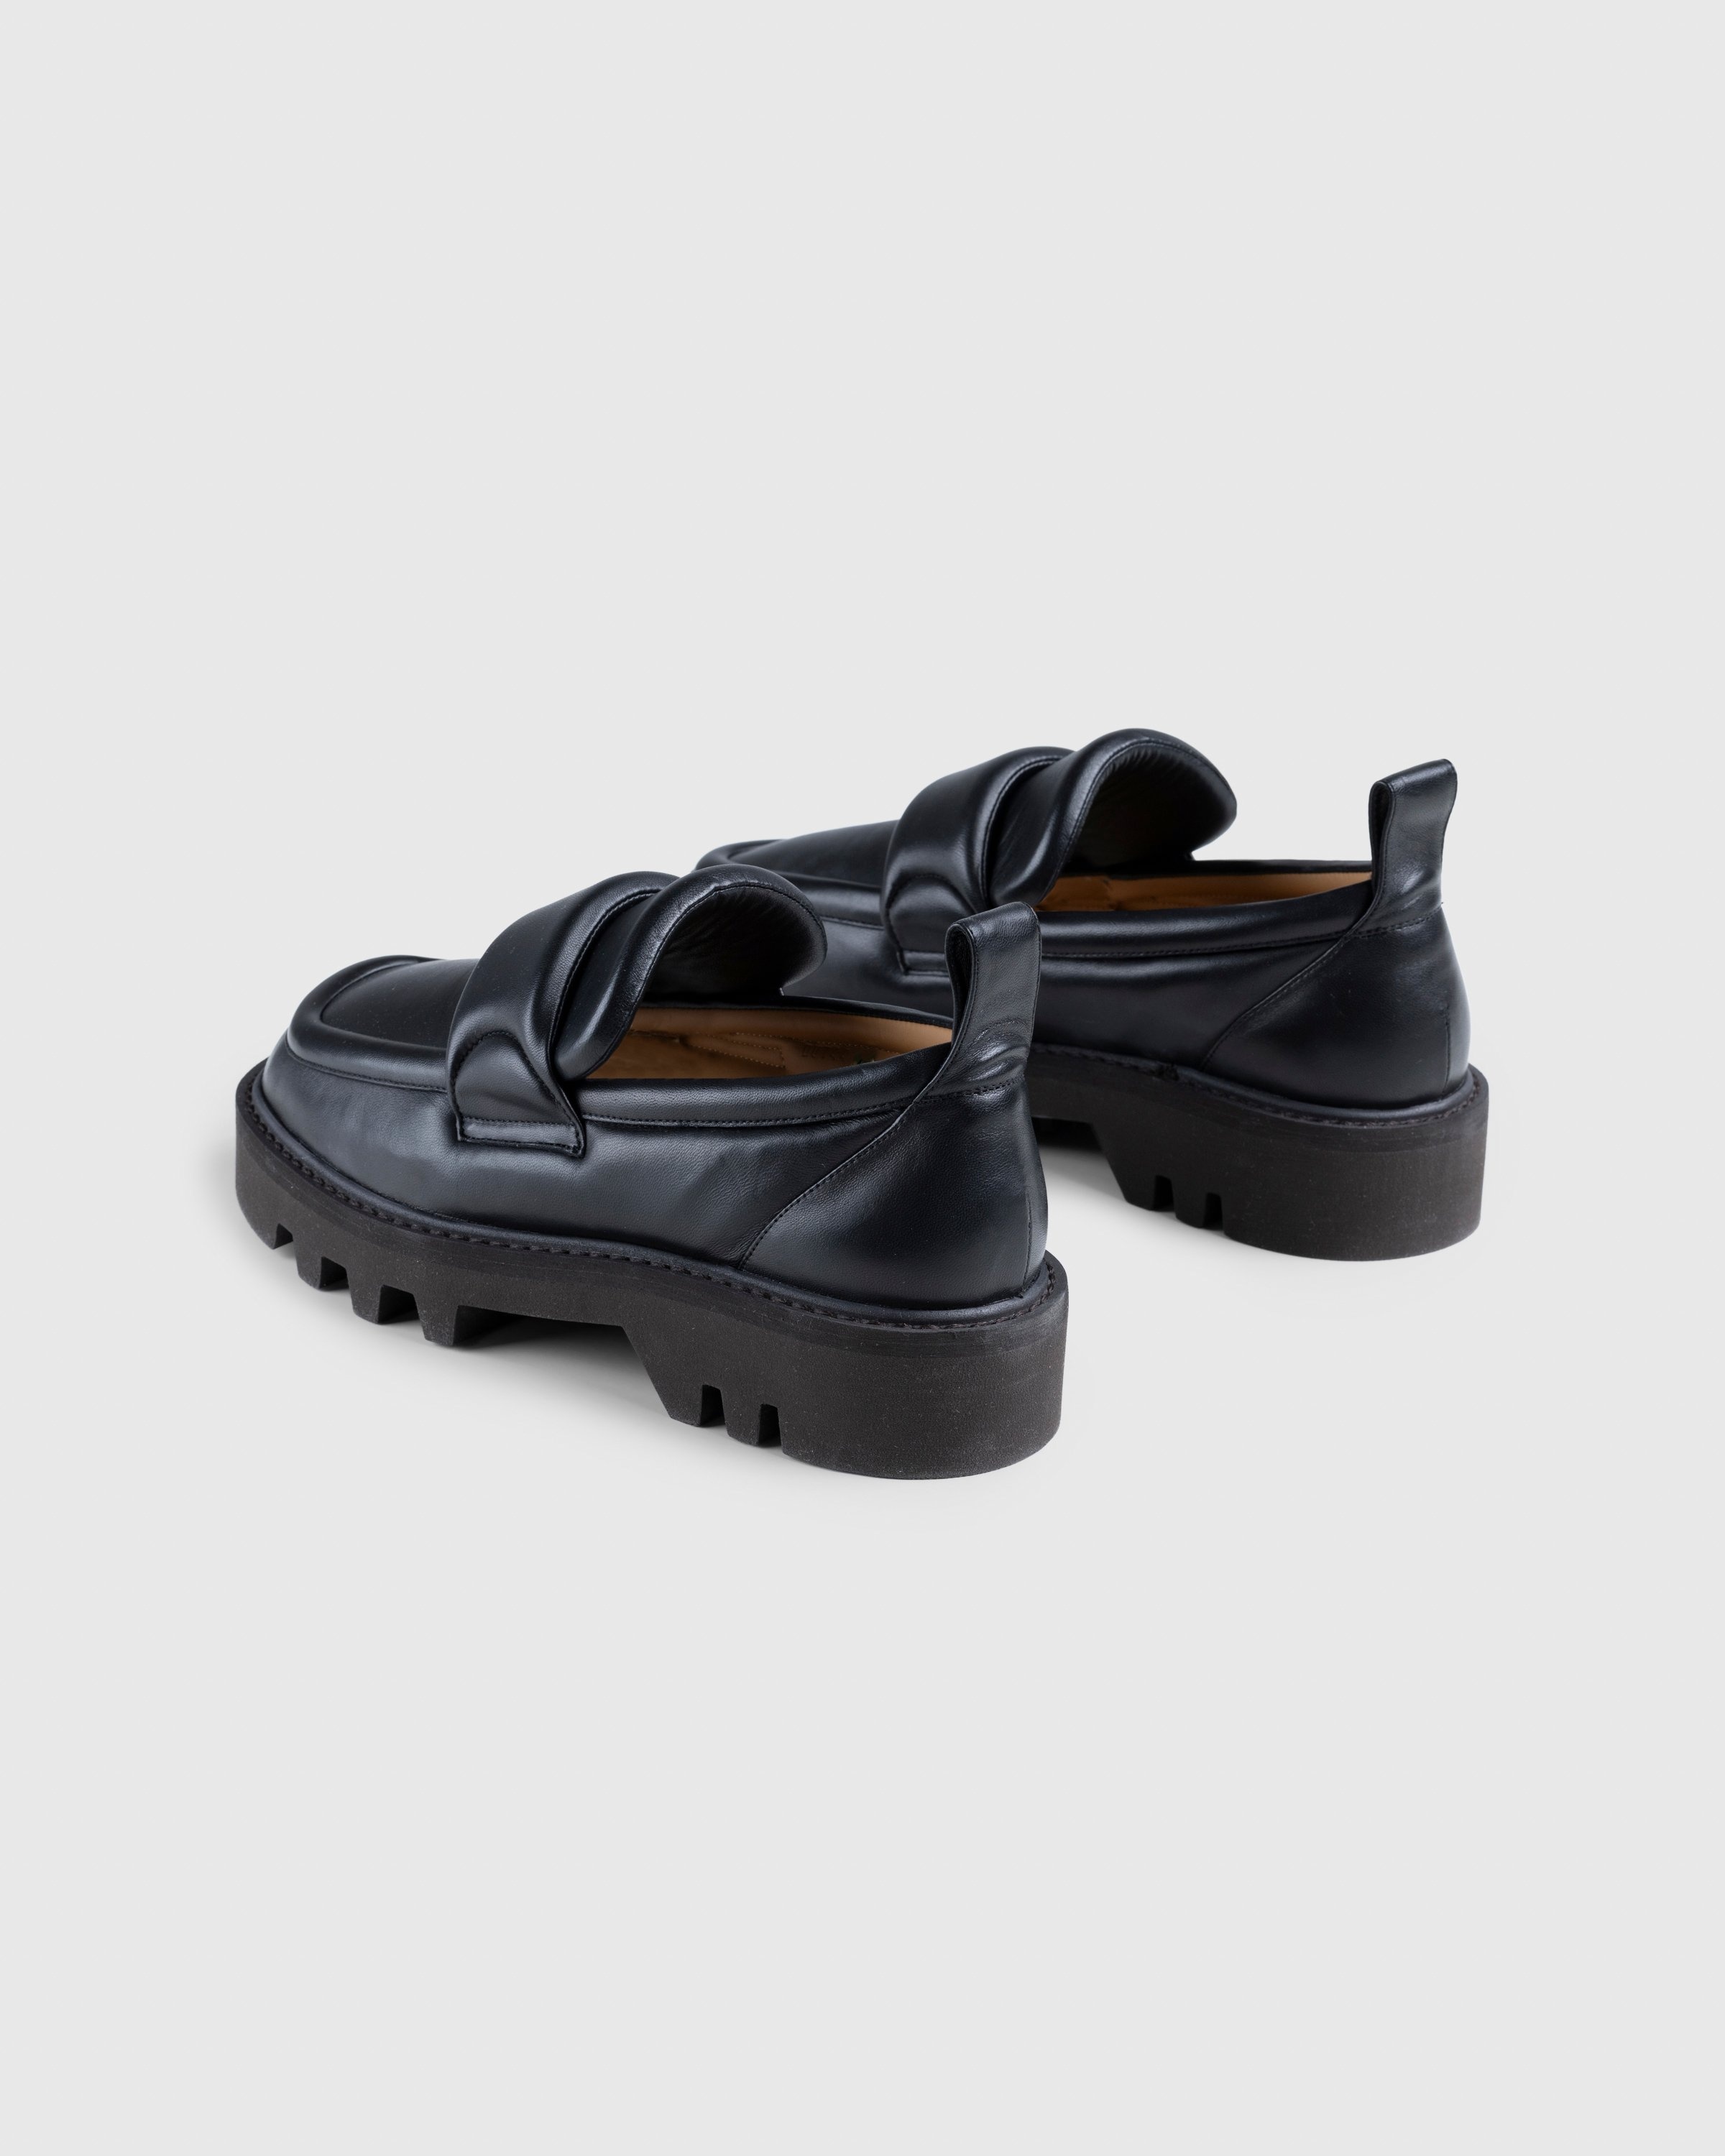 Dries van Noten – Padded Leather Loafers Black - Sandals & Slides - Black - Image 5